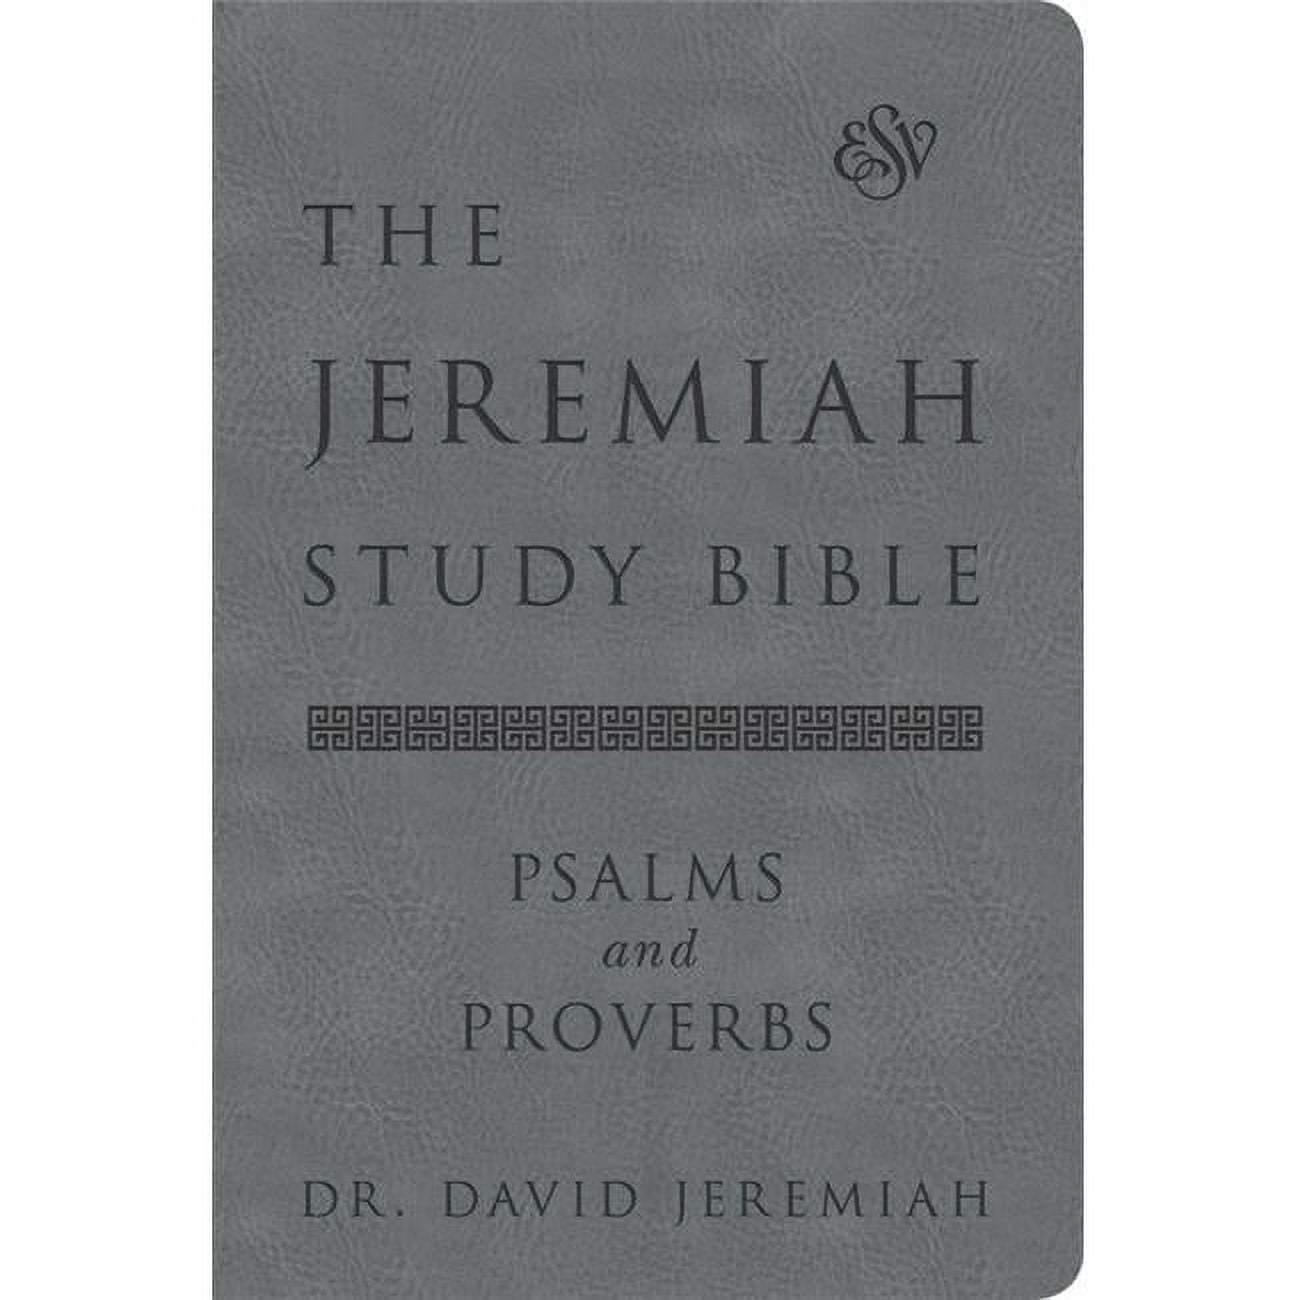 167702 Esv The Jeremiah Study Bible Psalms & Proverbs, Gray Euroluxe - Mar 2020